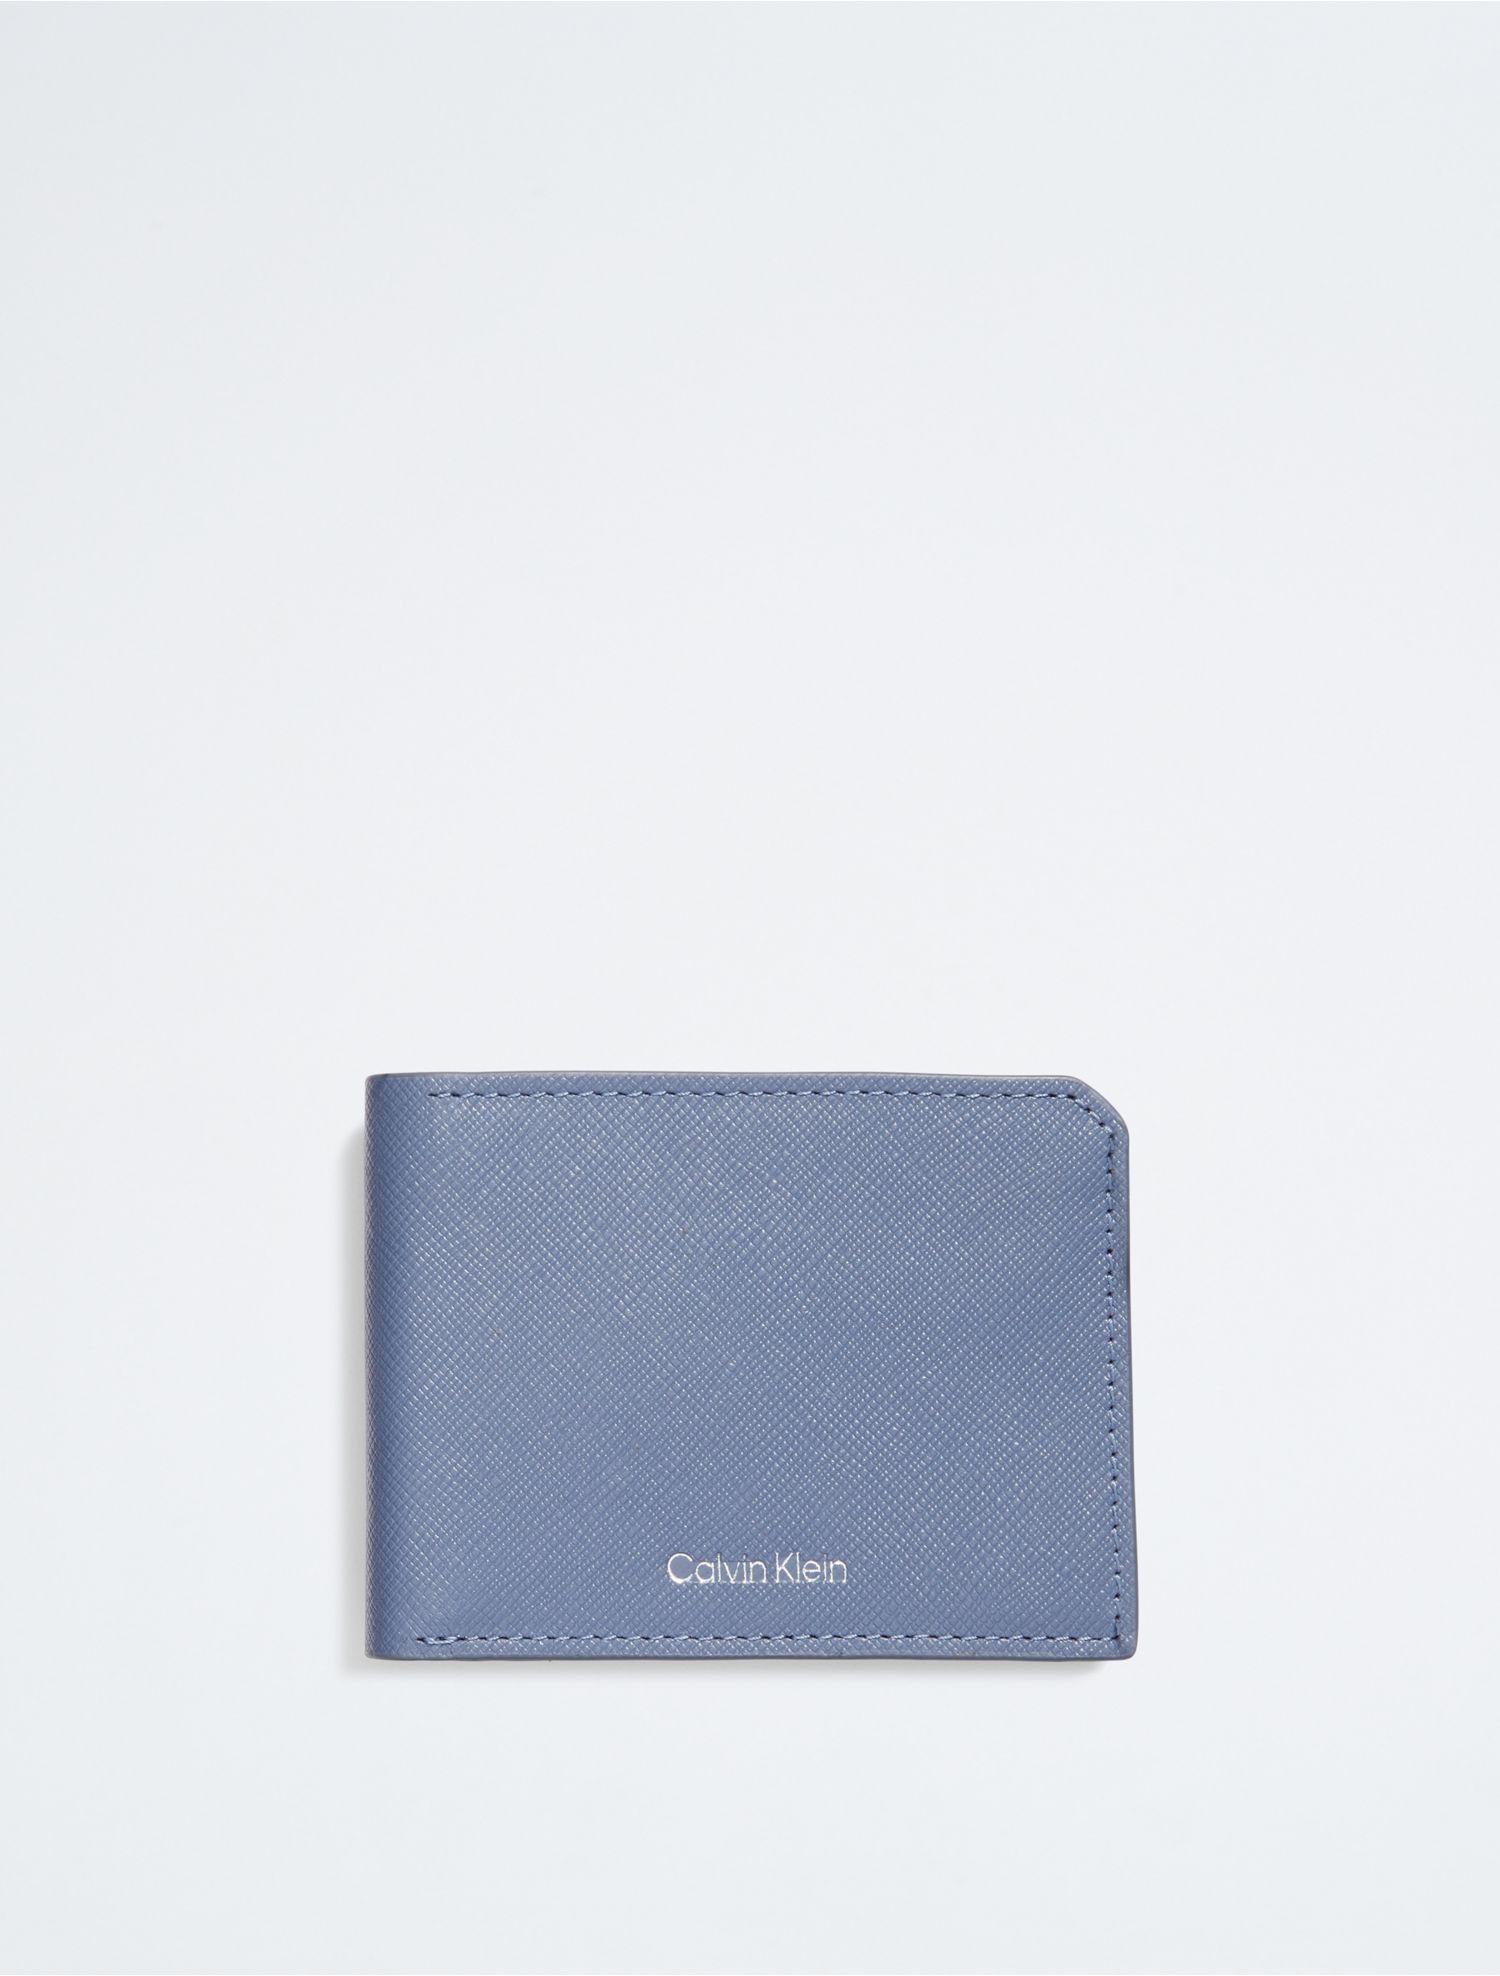 Calvin Klein Saffiano Leather Slim Bifold Wallet in Blue for Men